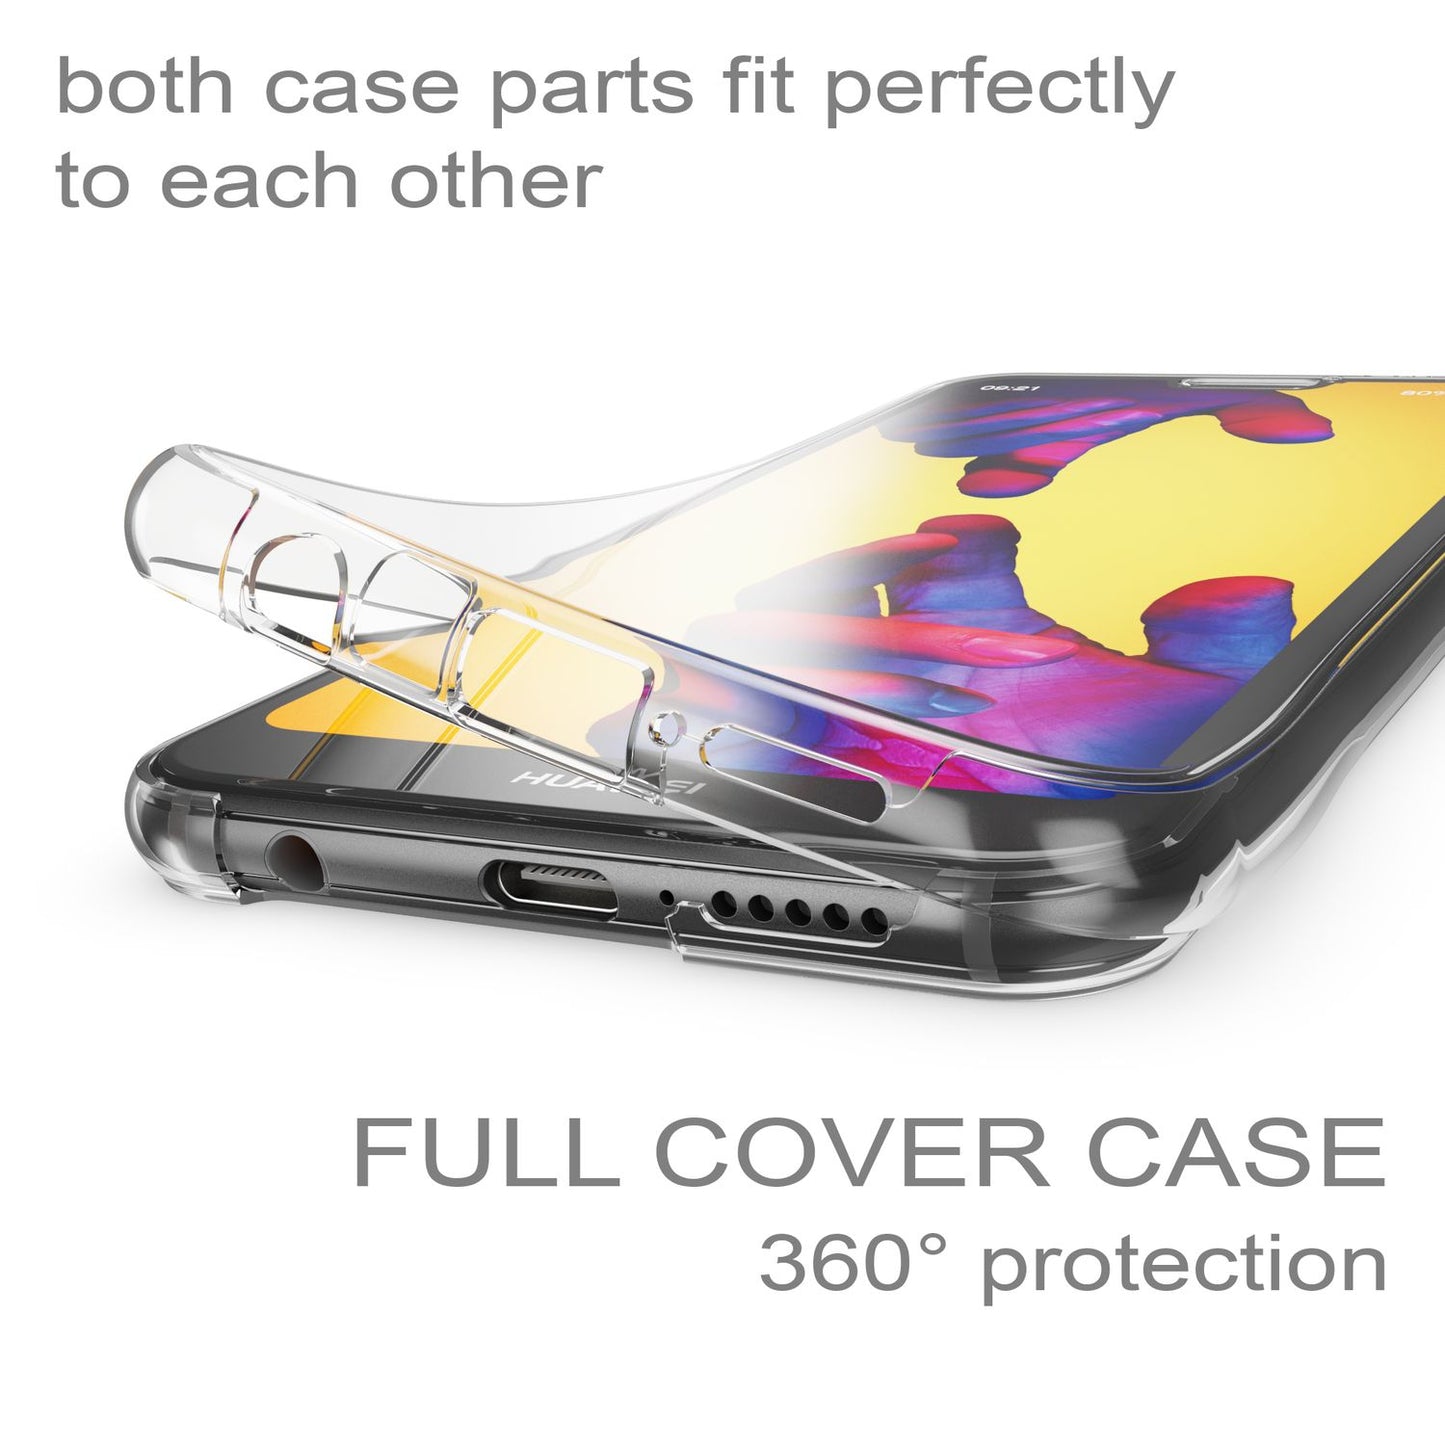 NALIA Glitzer Hülle 360 Grad für Huawei P20 Lite, Silikon Handyhülle Full Cover